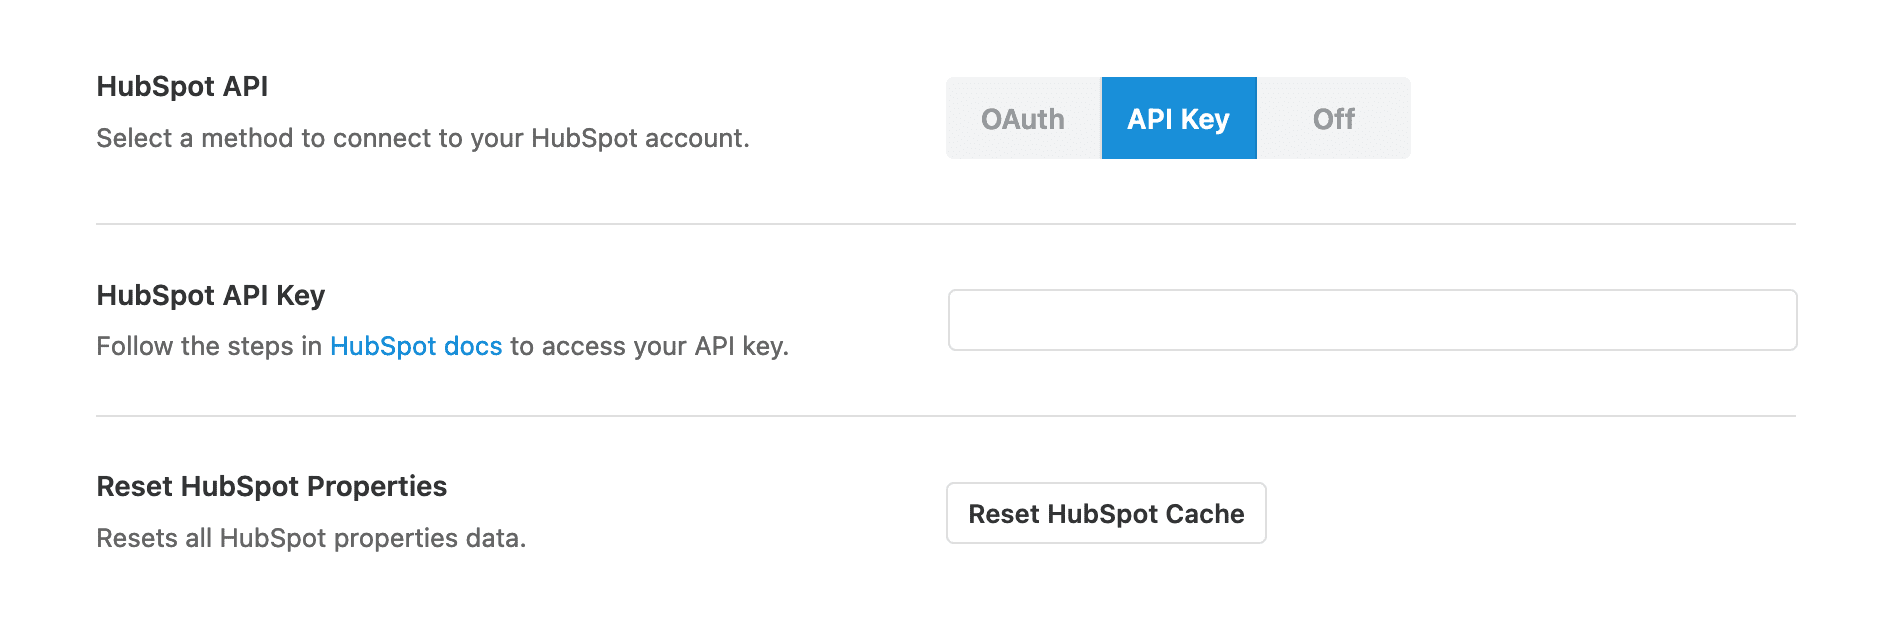 Hubspot API Key Connection